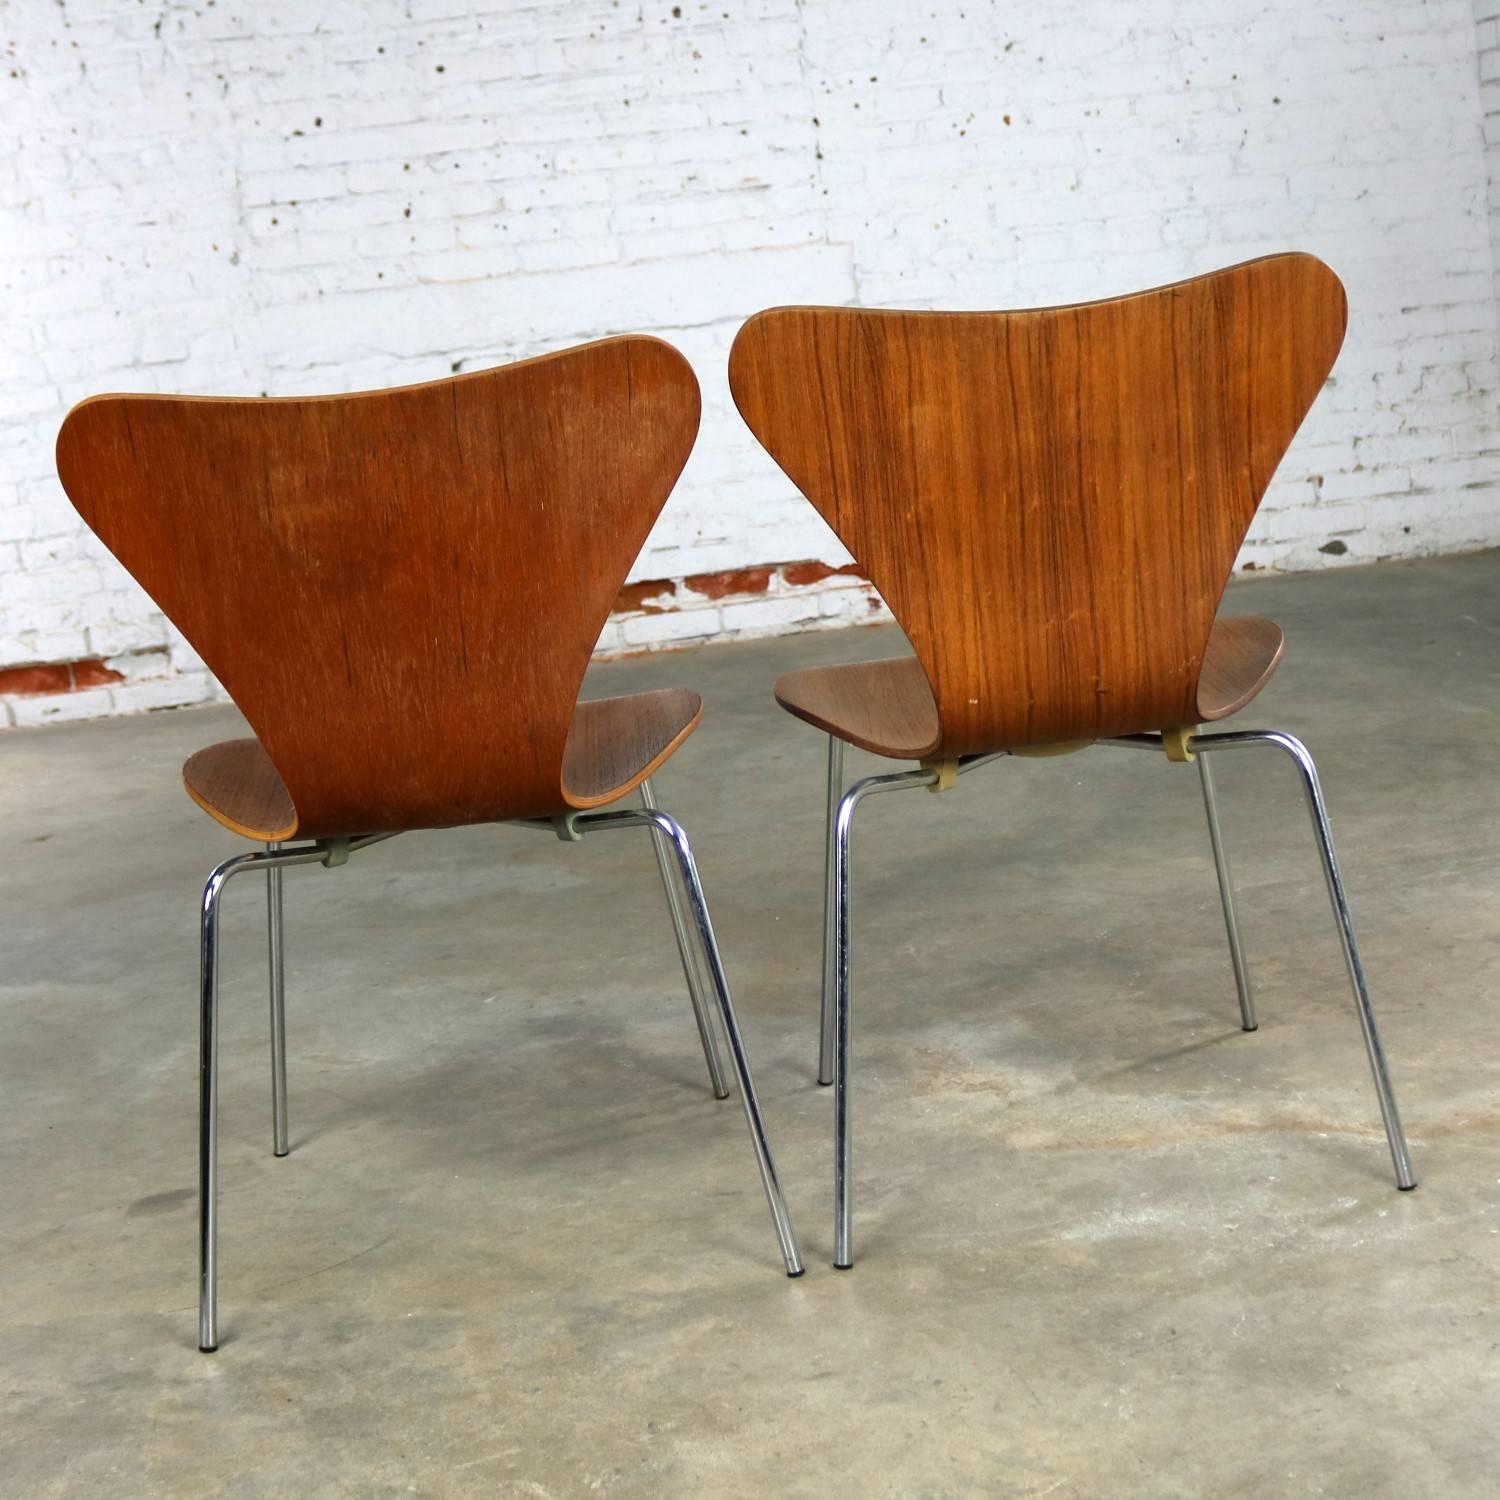 Chrome Series 7 Chairs by Arne Jacobsen for Fritz Hansen Vintage MCM Molded Teak, Pair